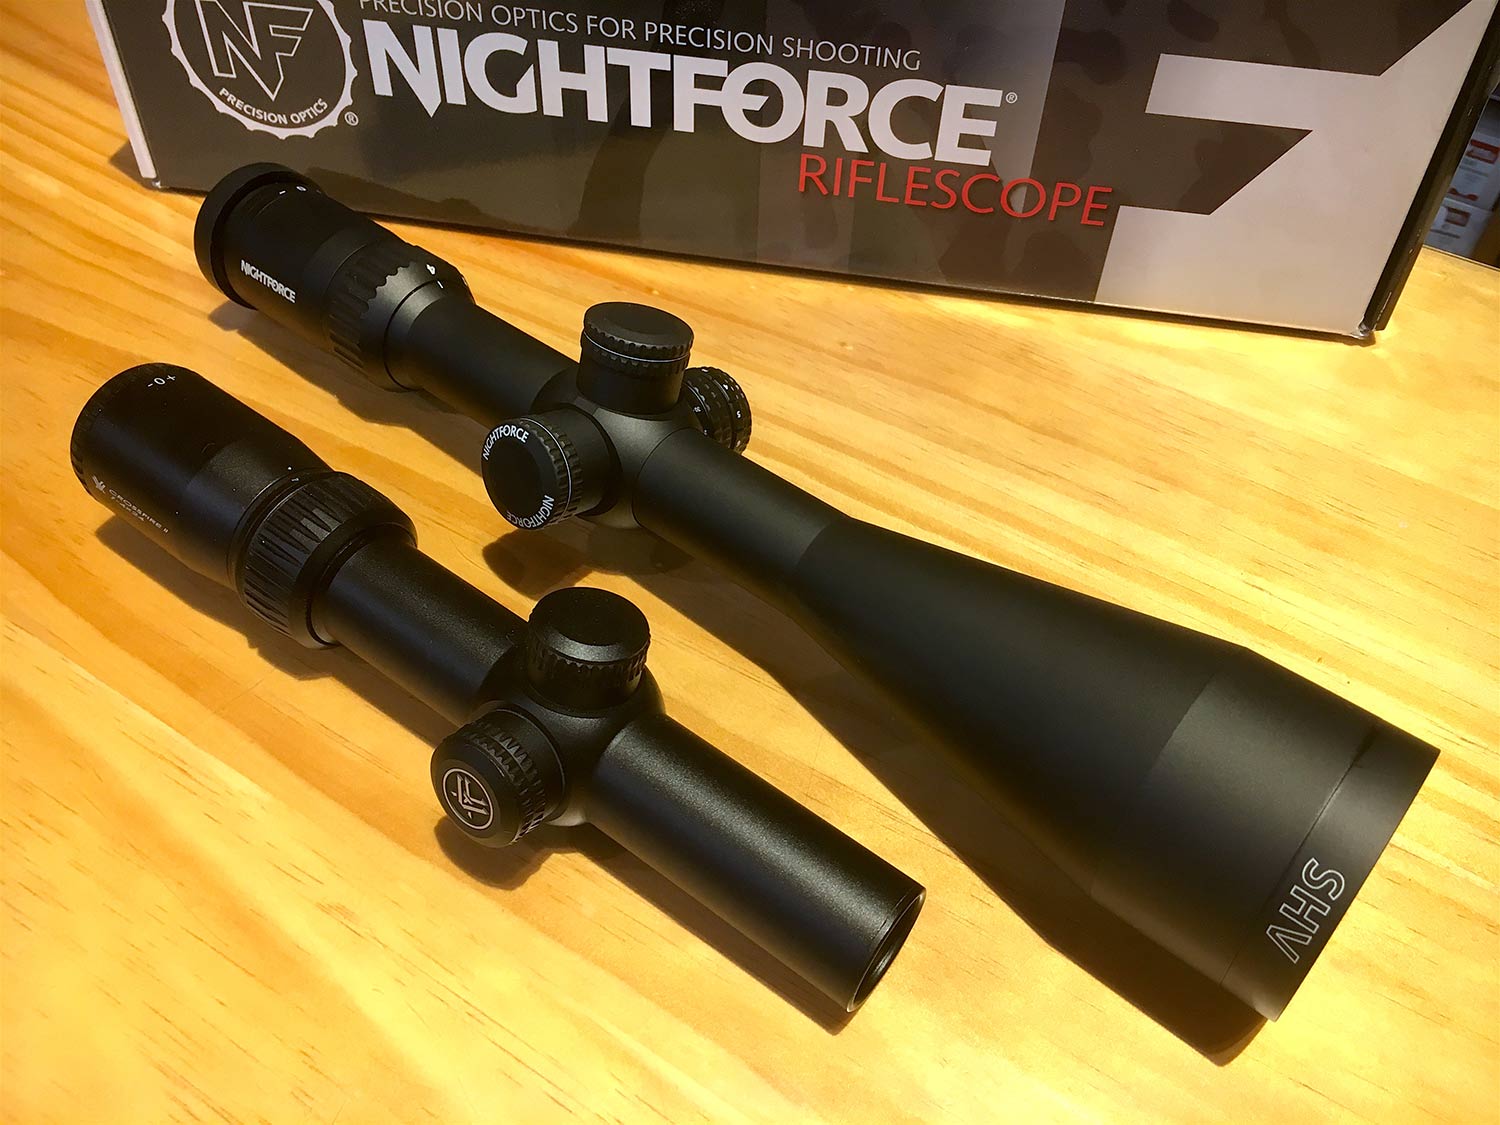 Two Nightforce riflescopes.